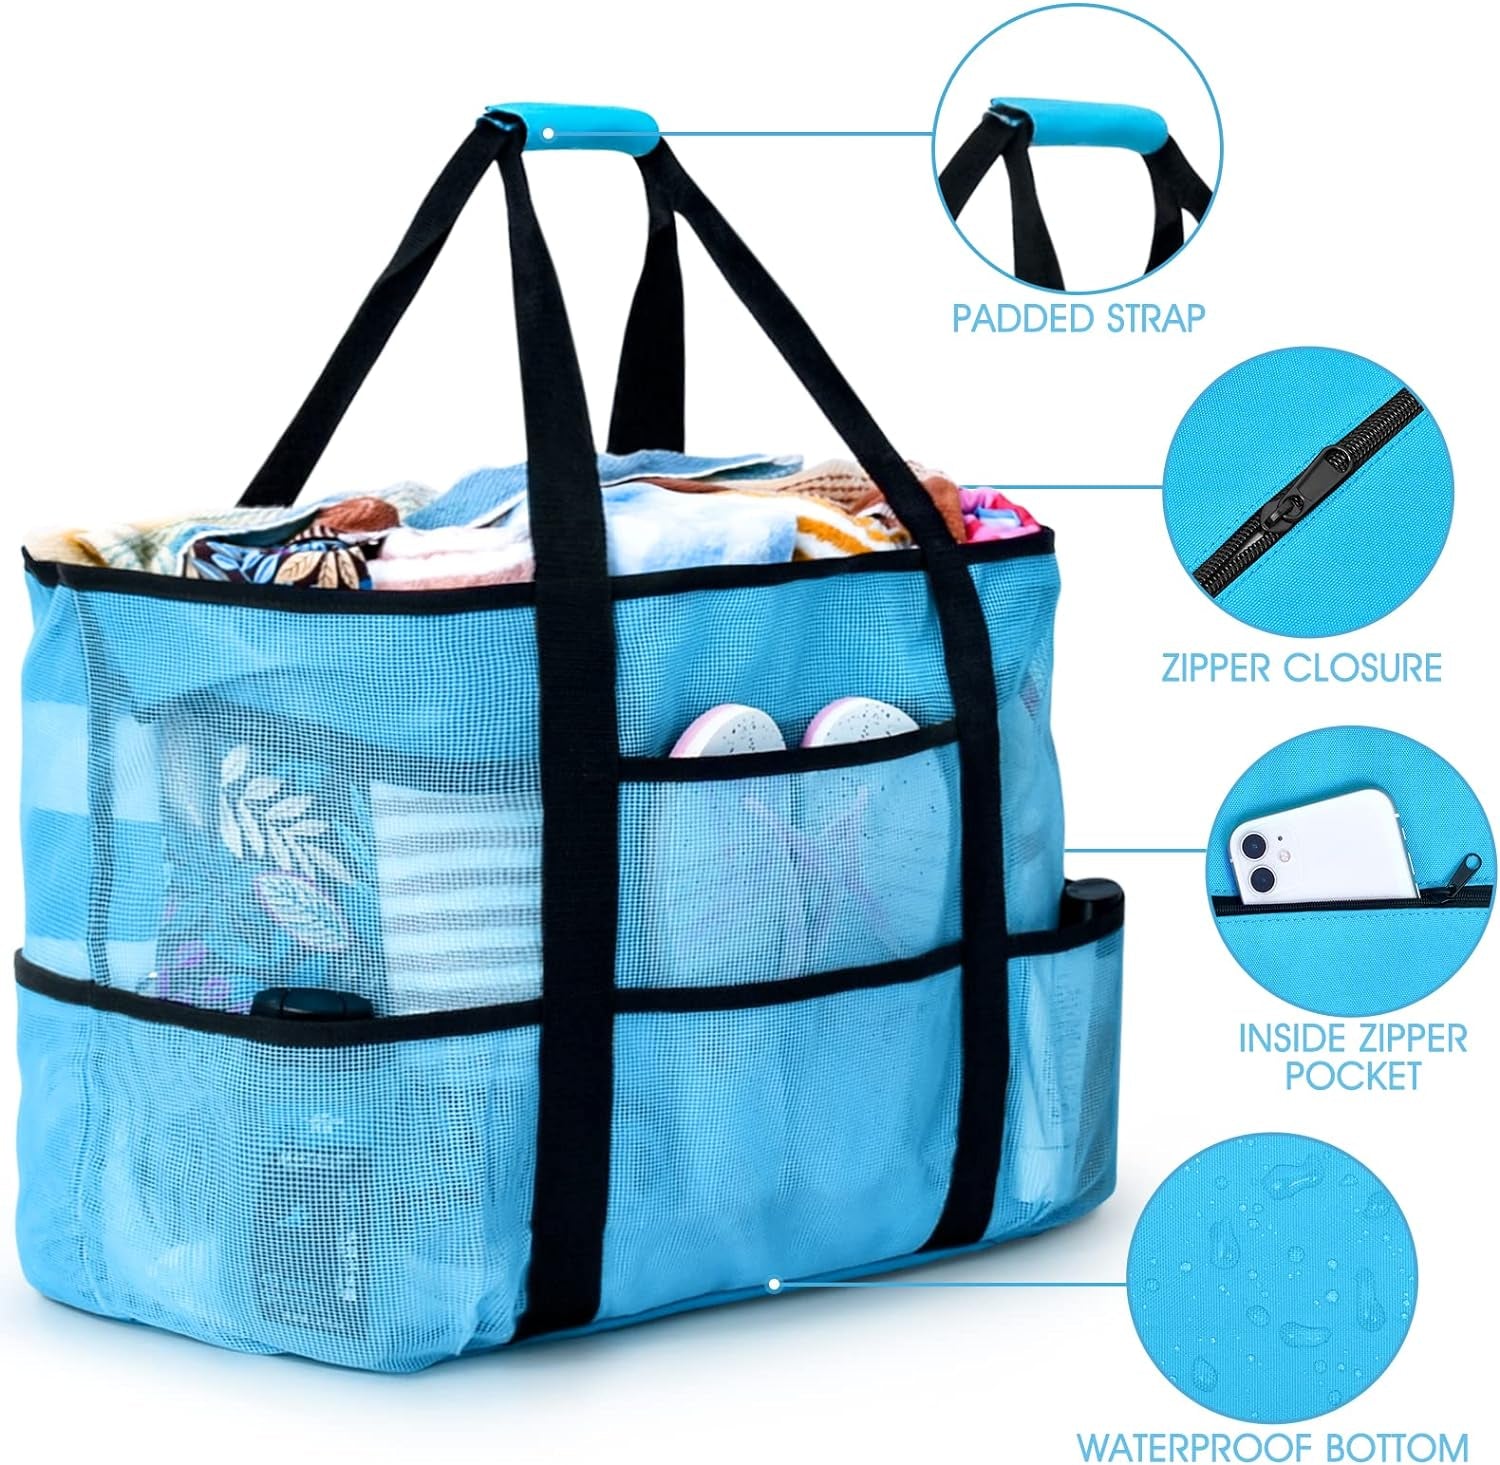 Beach Bag, Extra Large Beach Bags for Women Waterproof Sandproof, Mesh Beach Tote Bags Travel Pool Bag